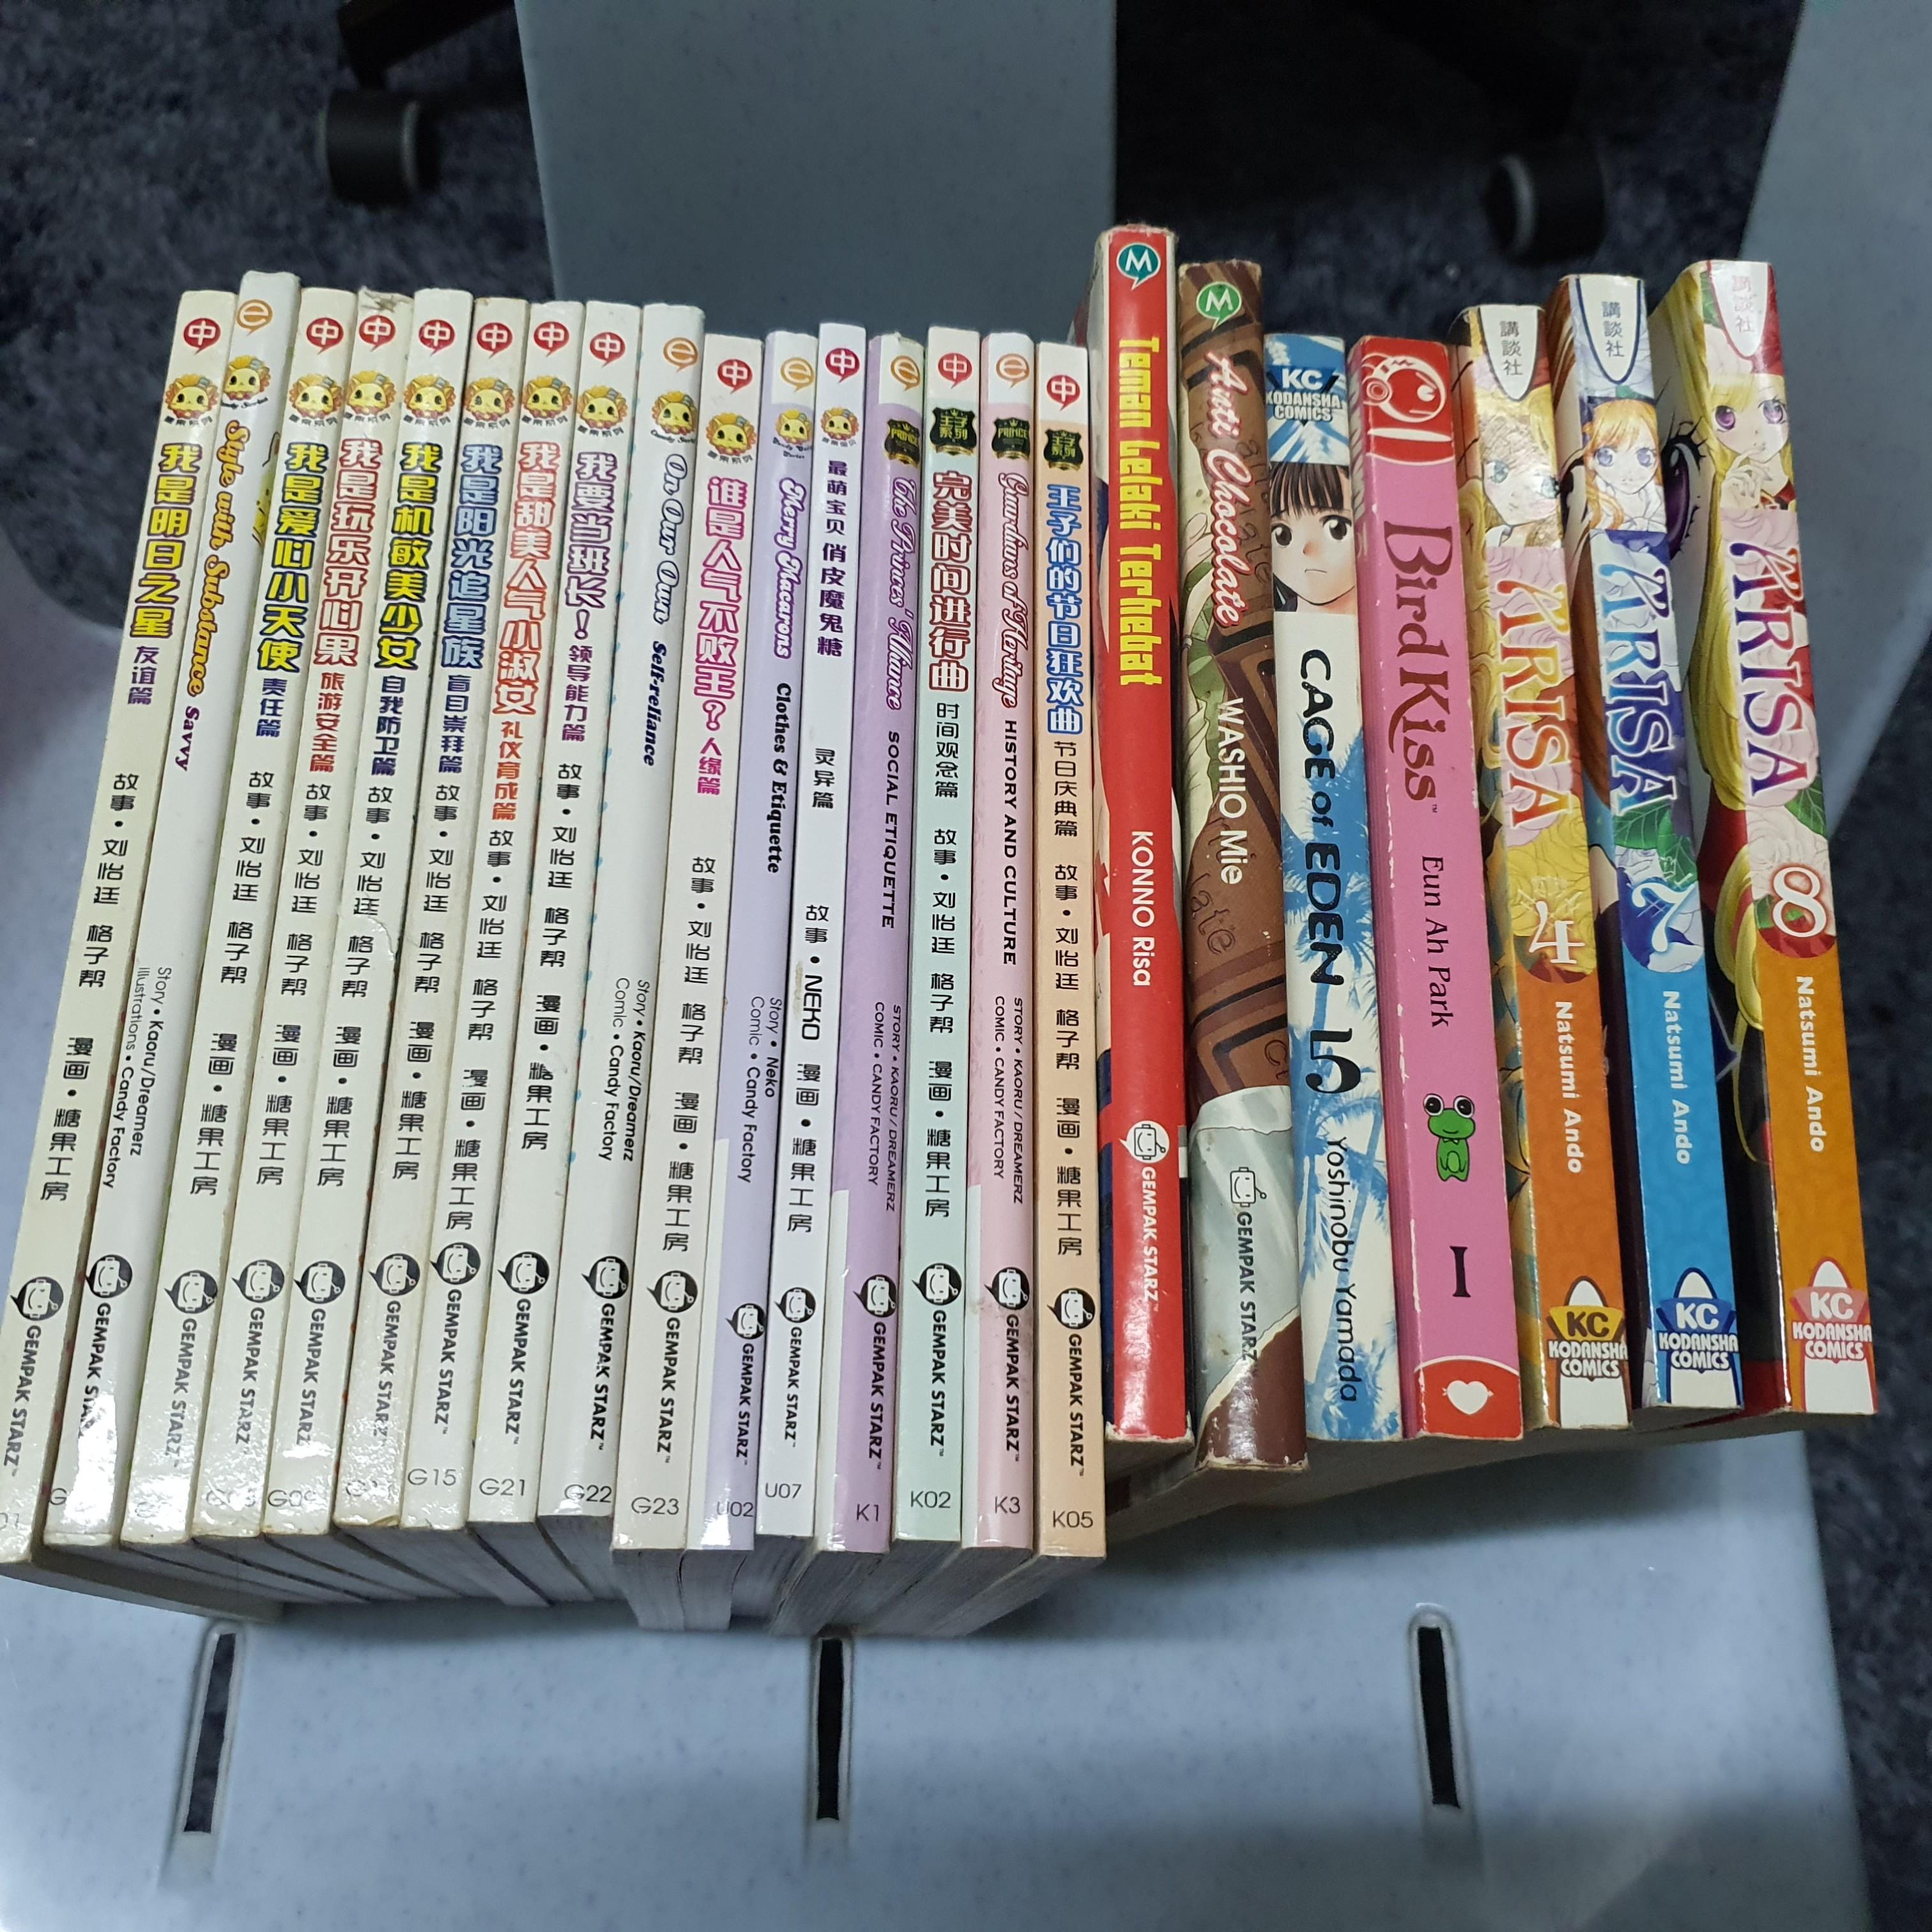 Anime - draw - Read... - Anime - draw - Read books, comics | Facebook